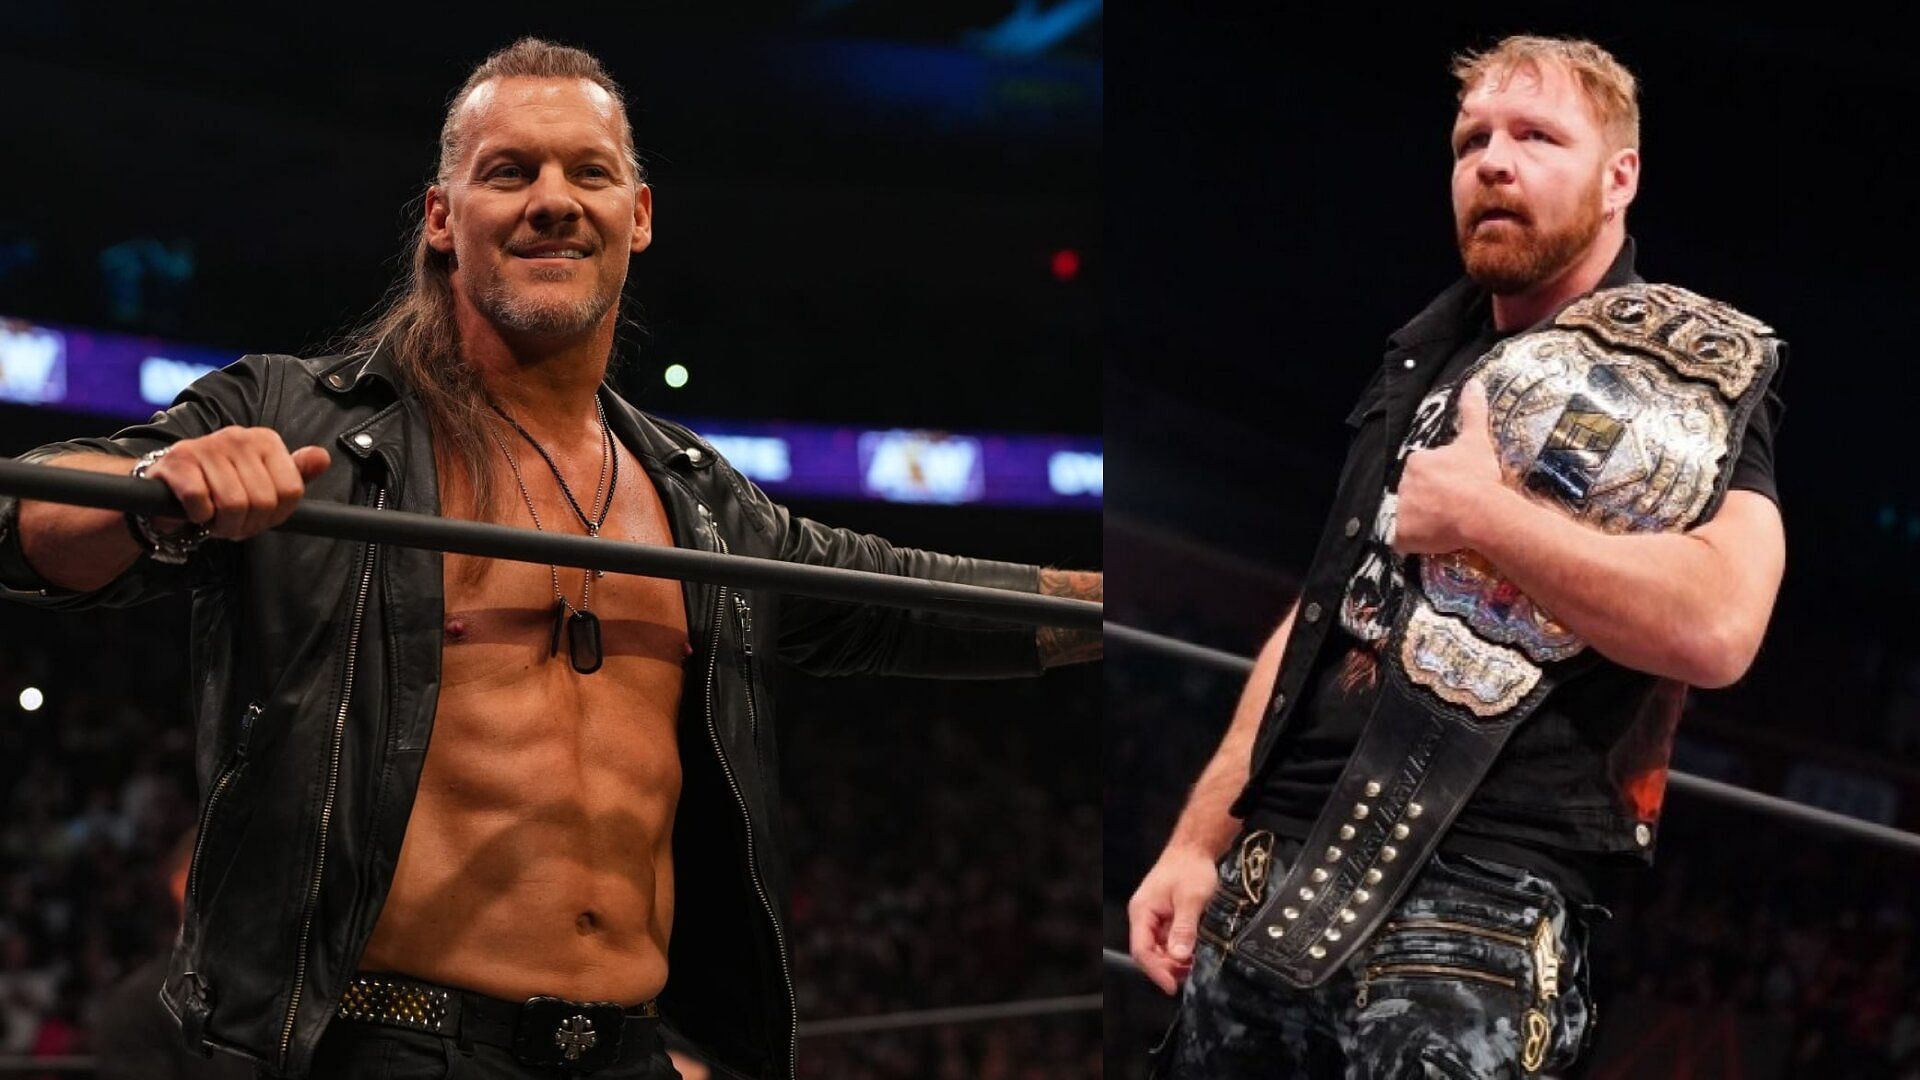 Chris Jericho vs. Jon Moxley for the AEW Interim World Championship is set